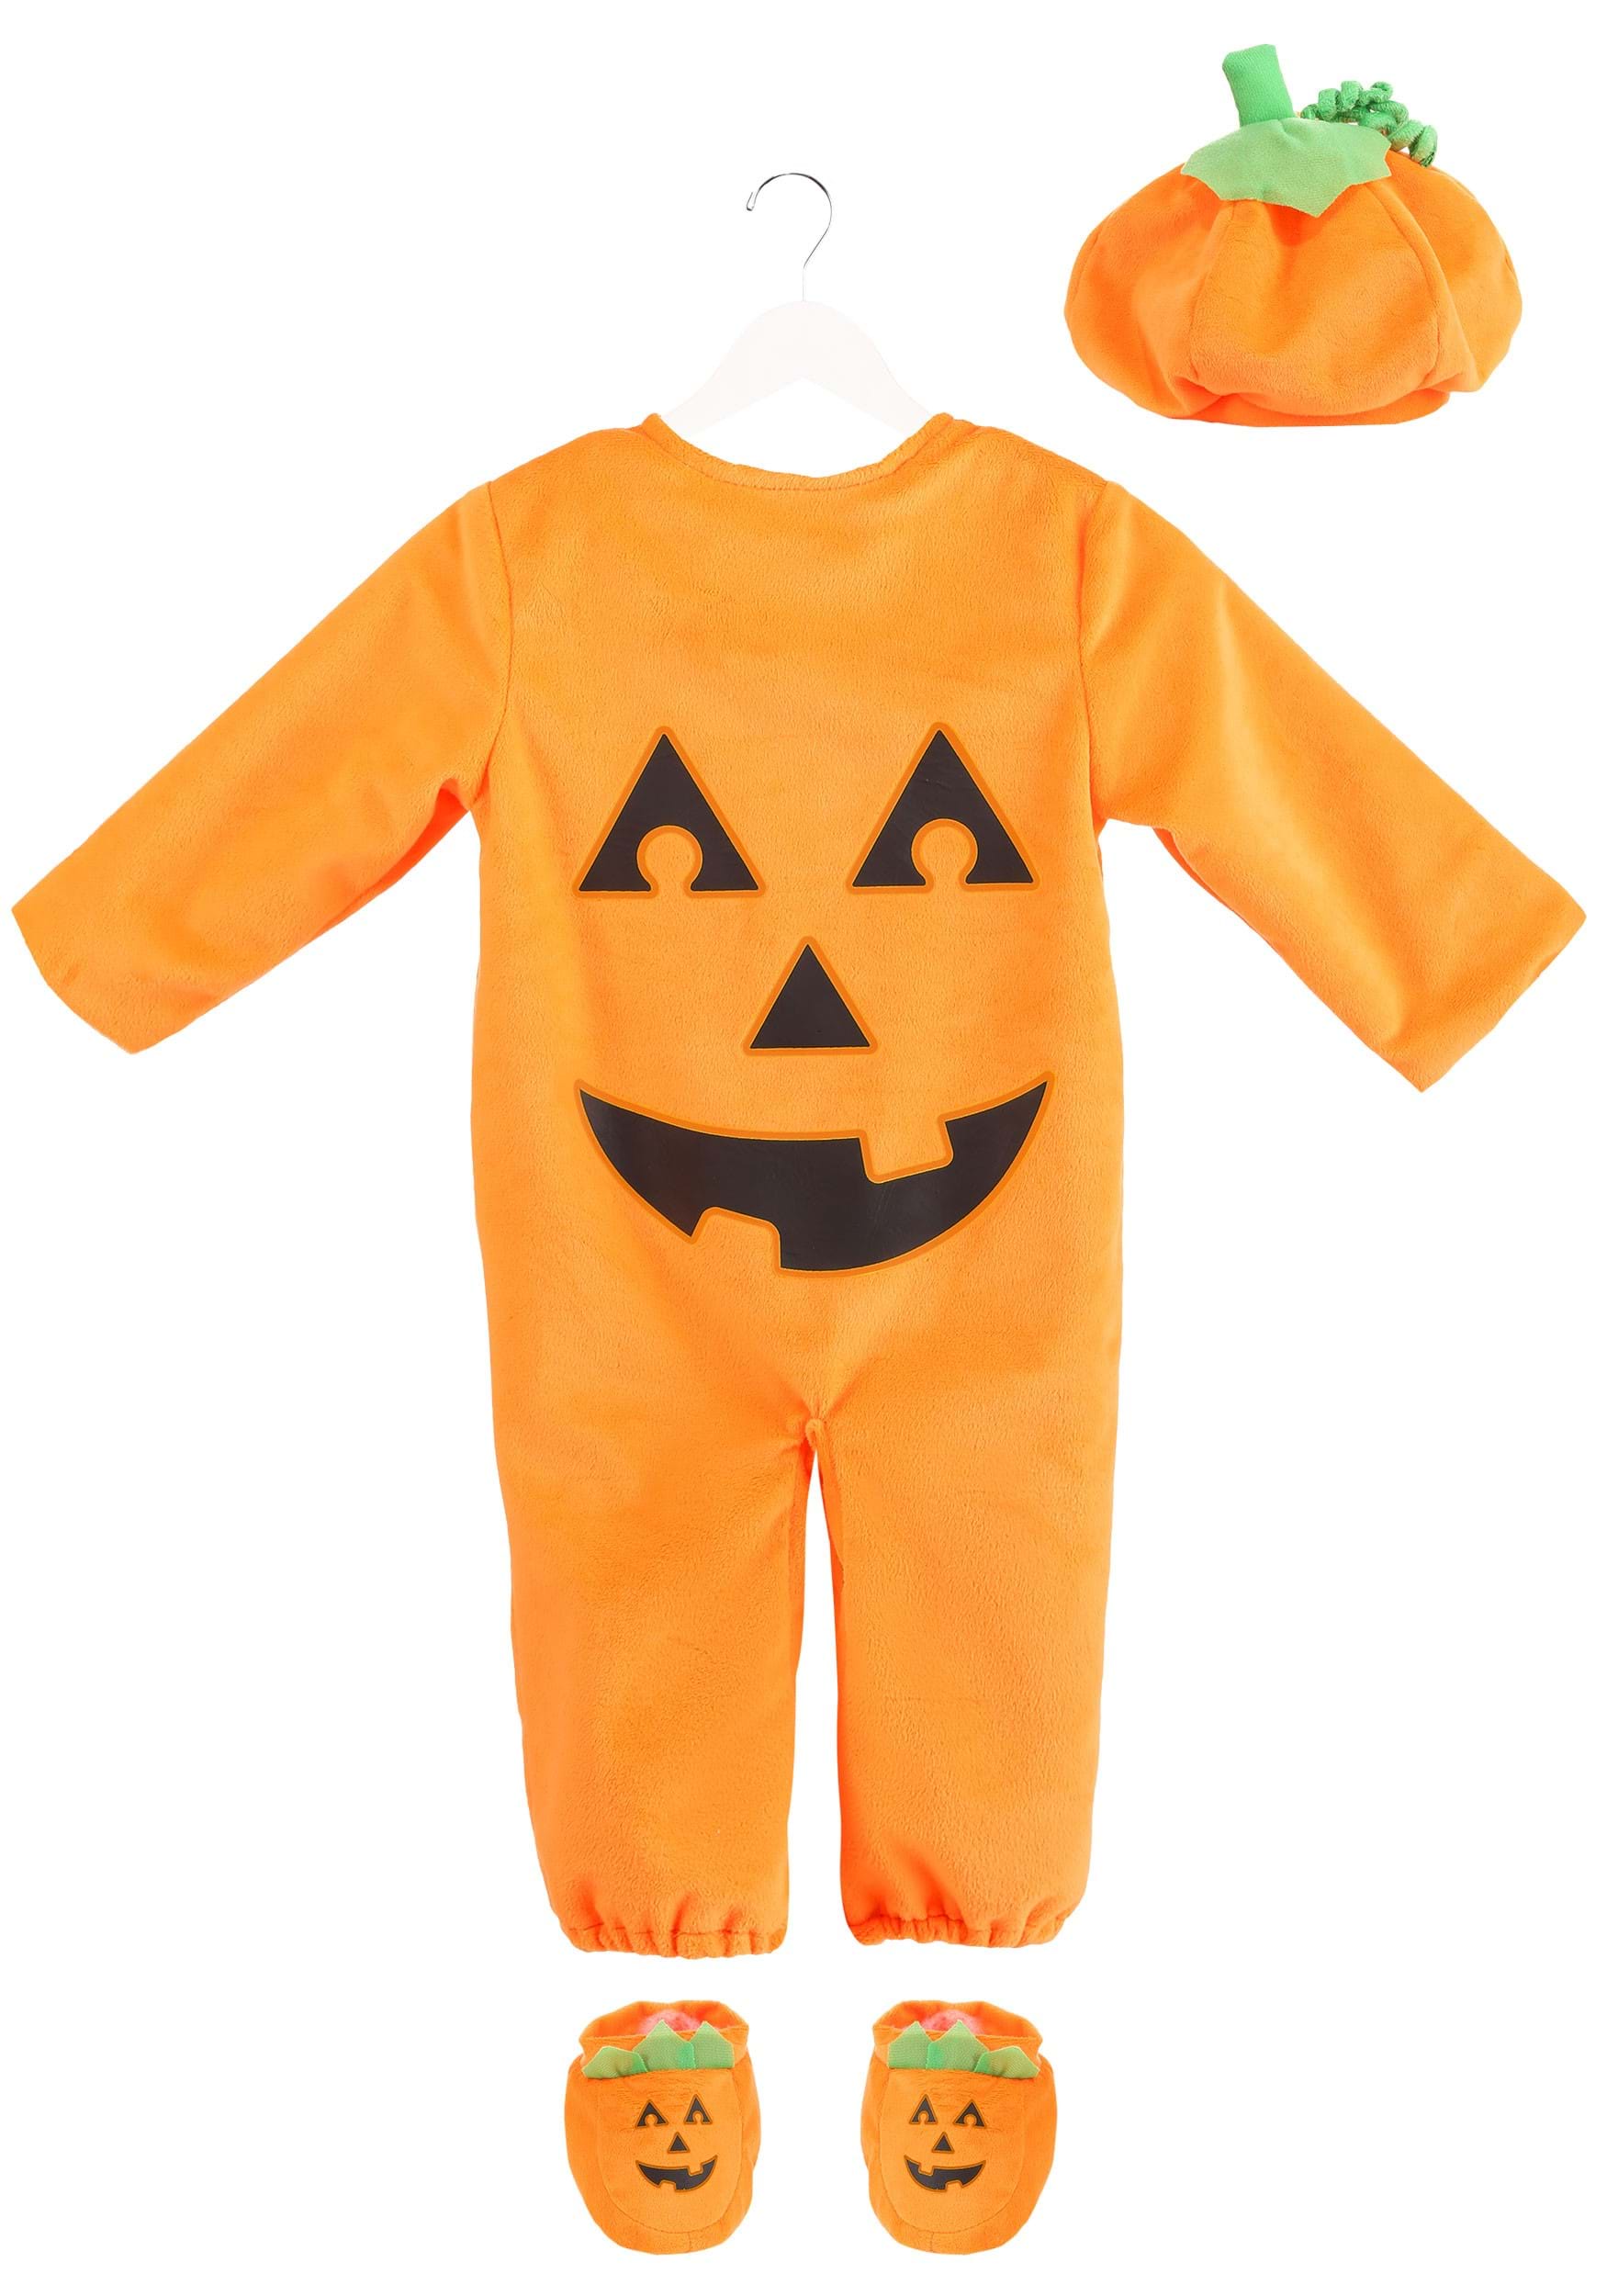 Chunkin Pumpkin Infant Costume